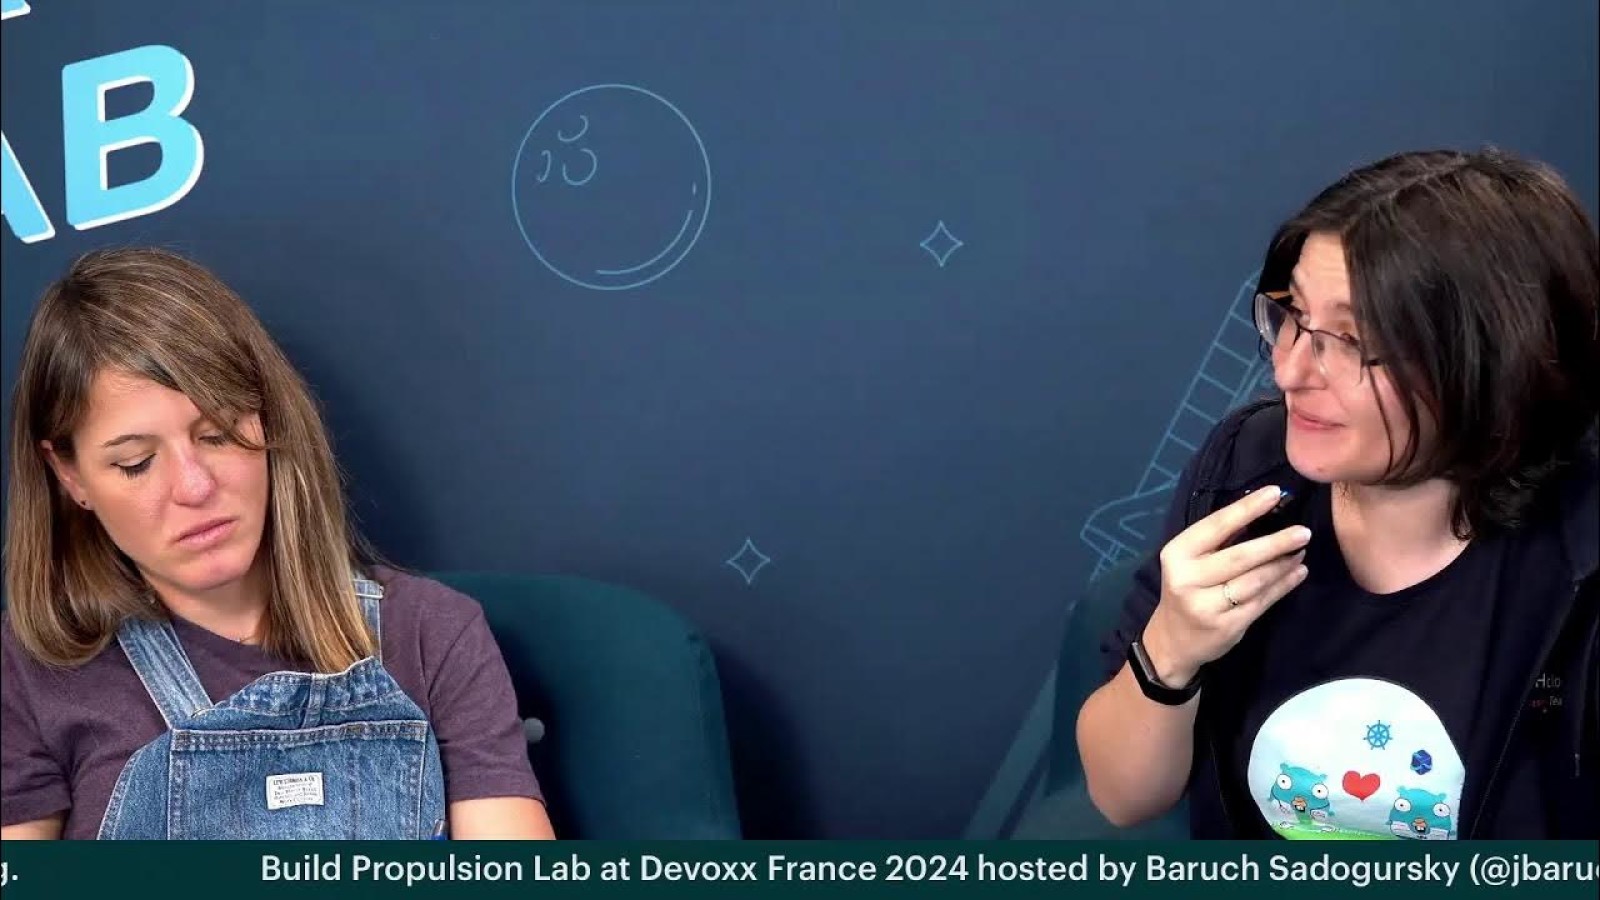 #BuildPropulsionLab at #Devoxx France 2024 with @ane_naiz and @aurelievache